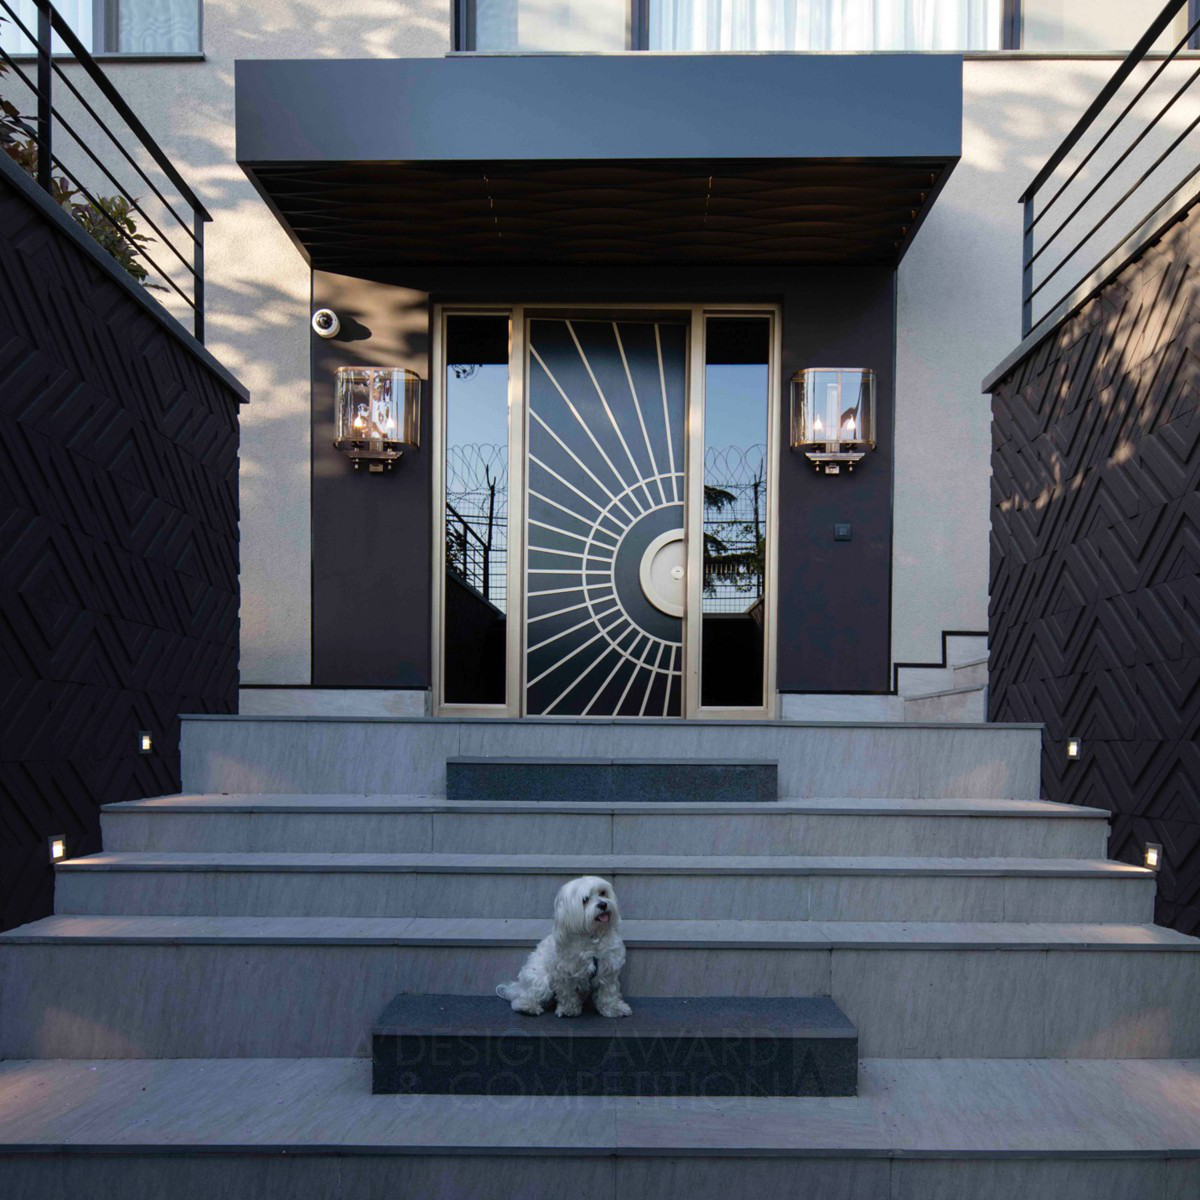 Bebek House Residence by Sebnem Buhara Iron Interior Space and Exhibition Design Award Winner 2018 